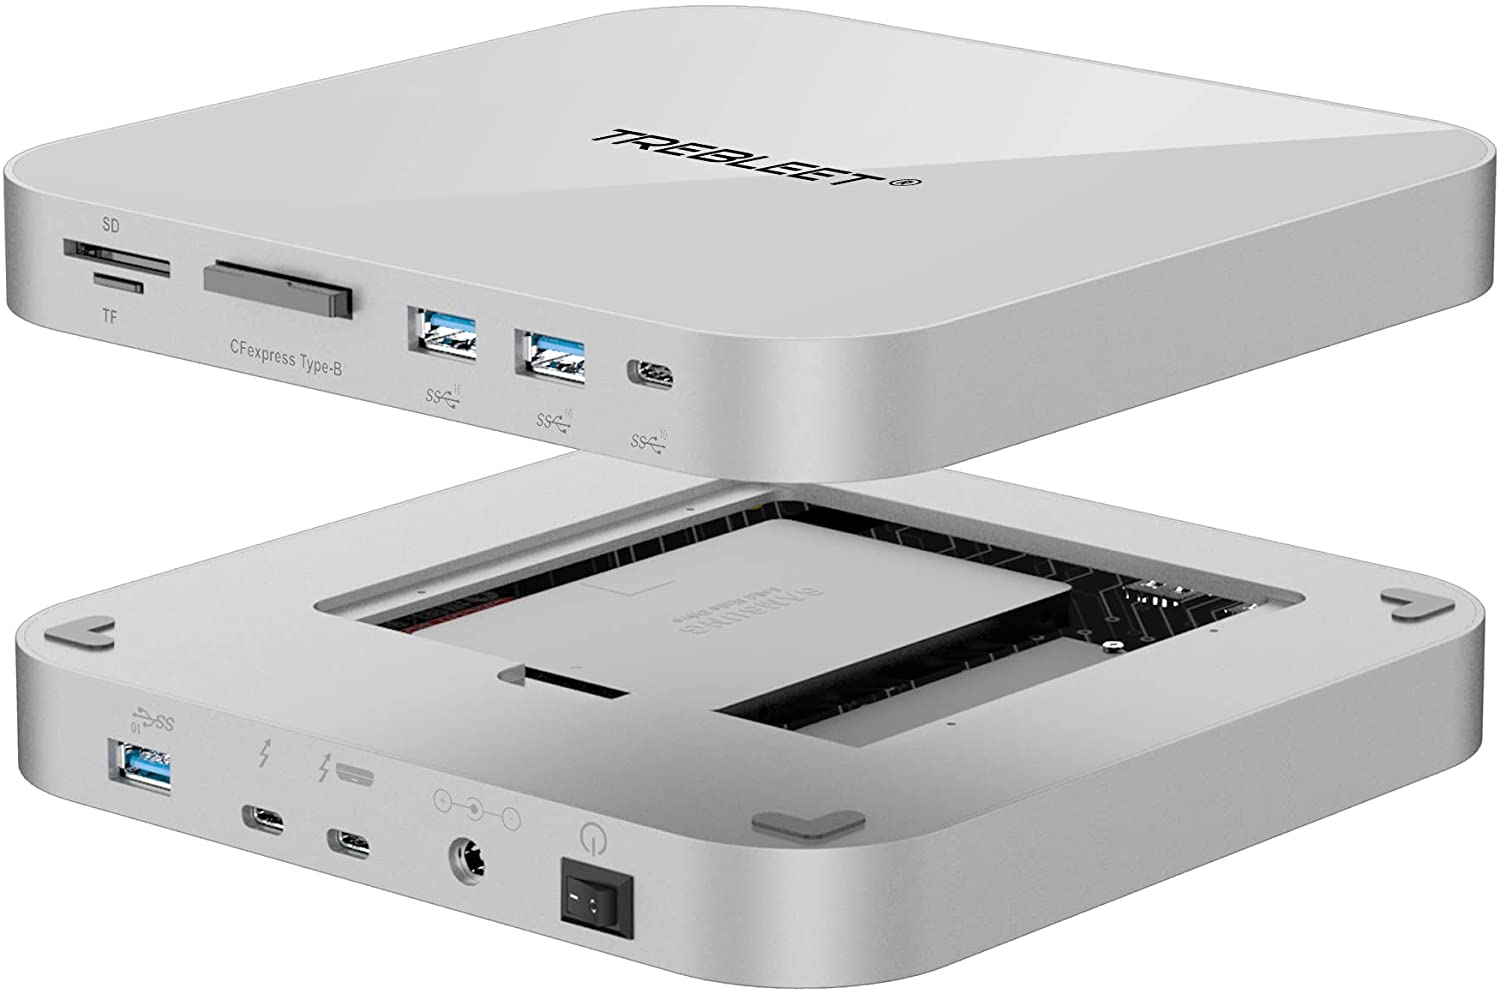 Mac Mini Thunderbolt 3 Dock with Dual NVMe Slot & CFexpress Card Slot -  Silver